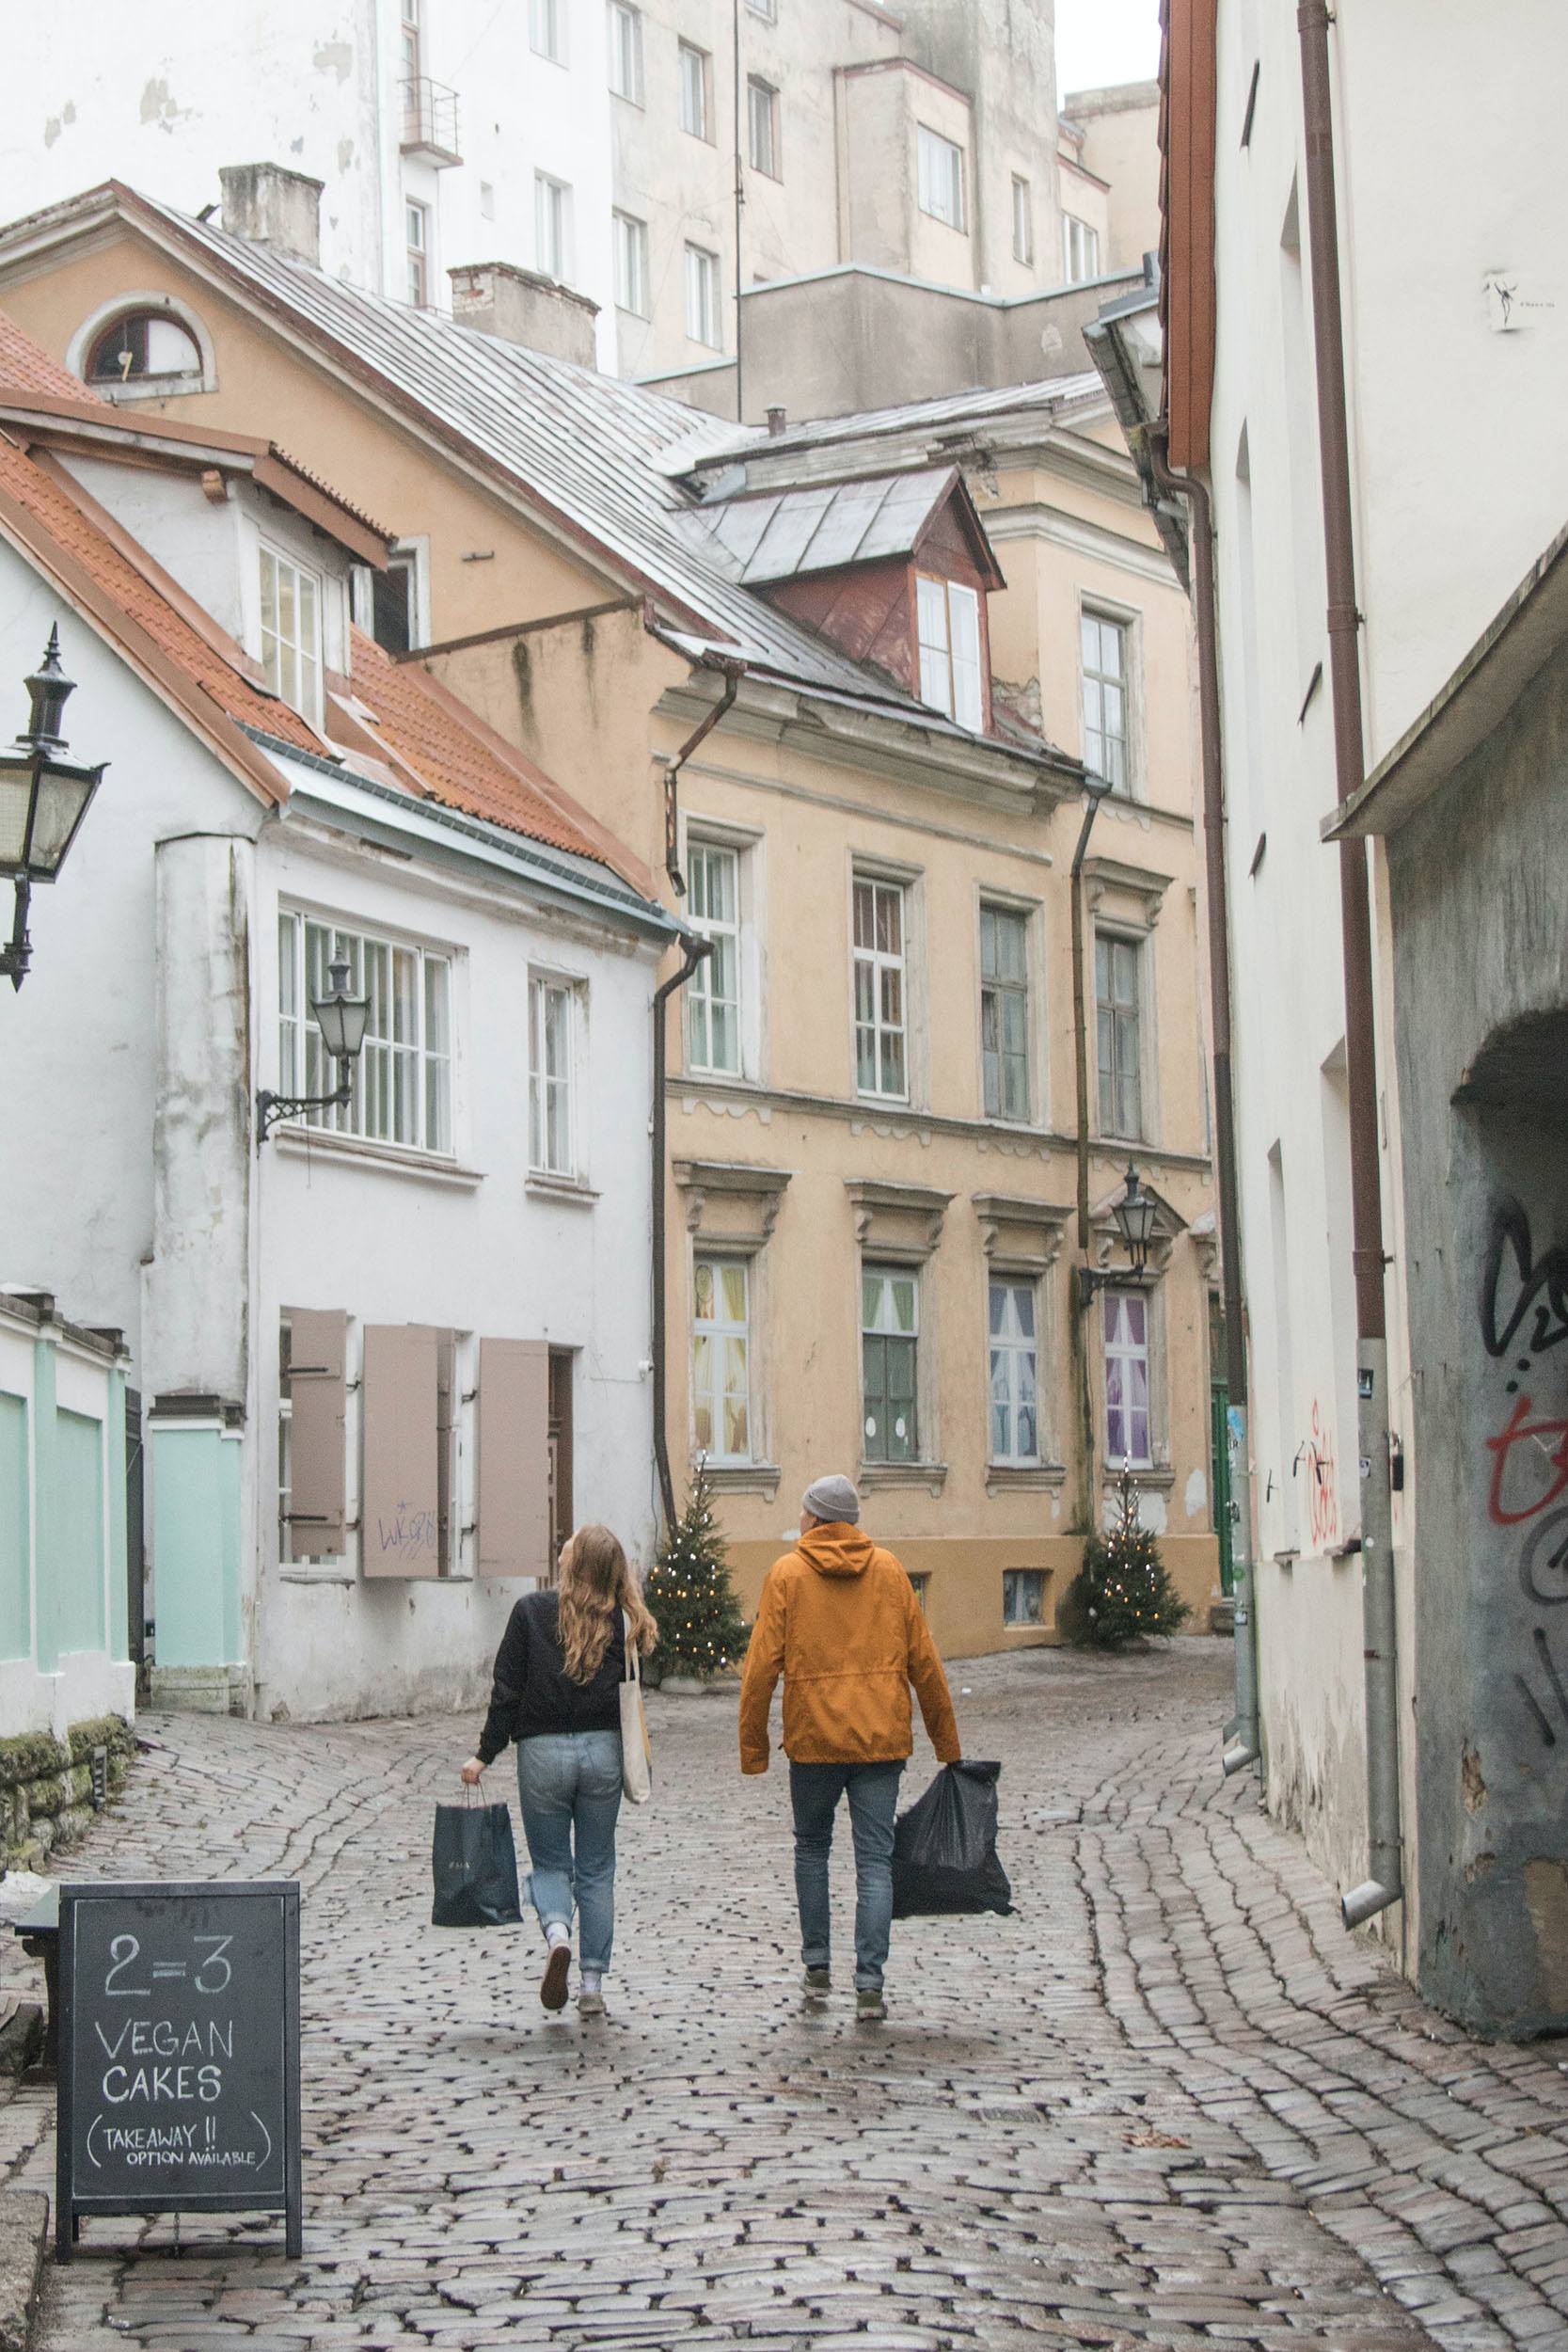 People walking through the cobblestone streets of Tallinn Estonia